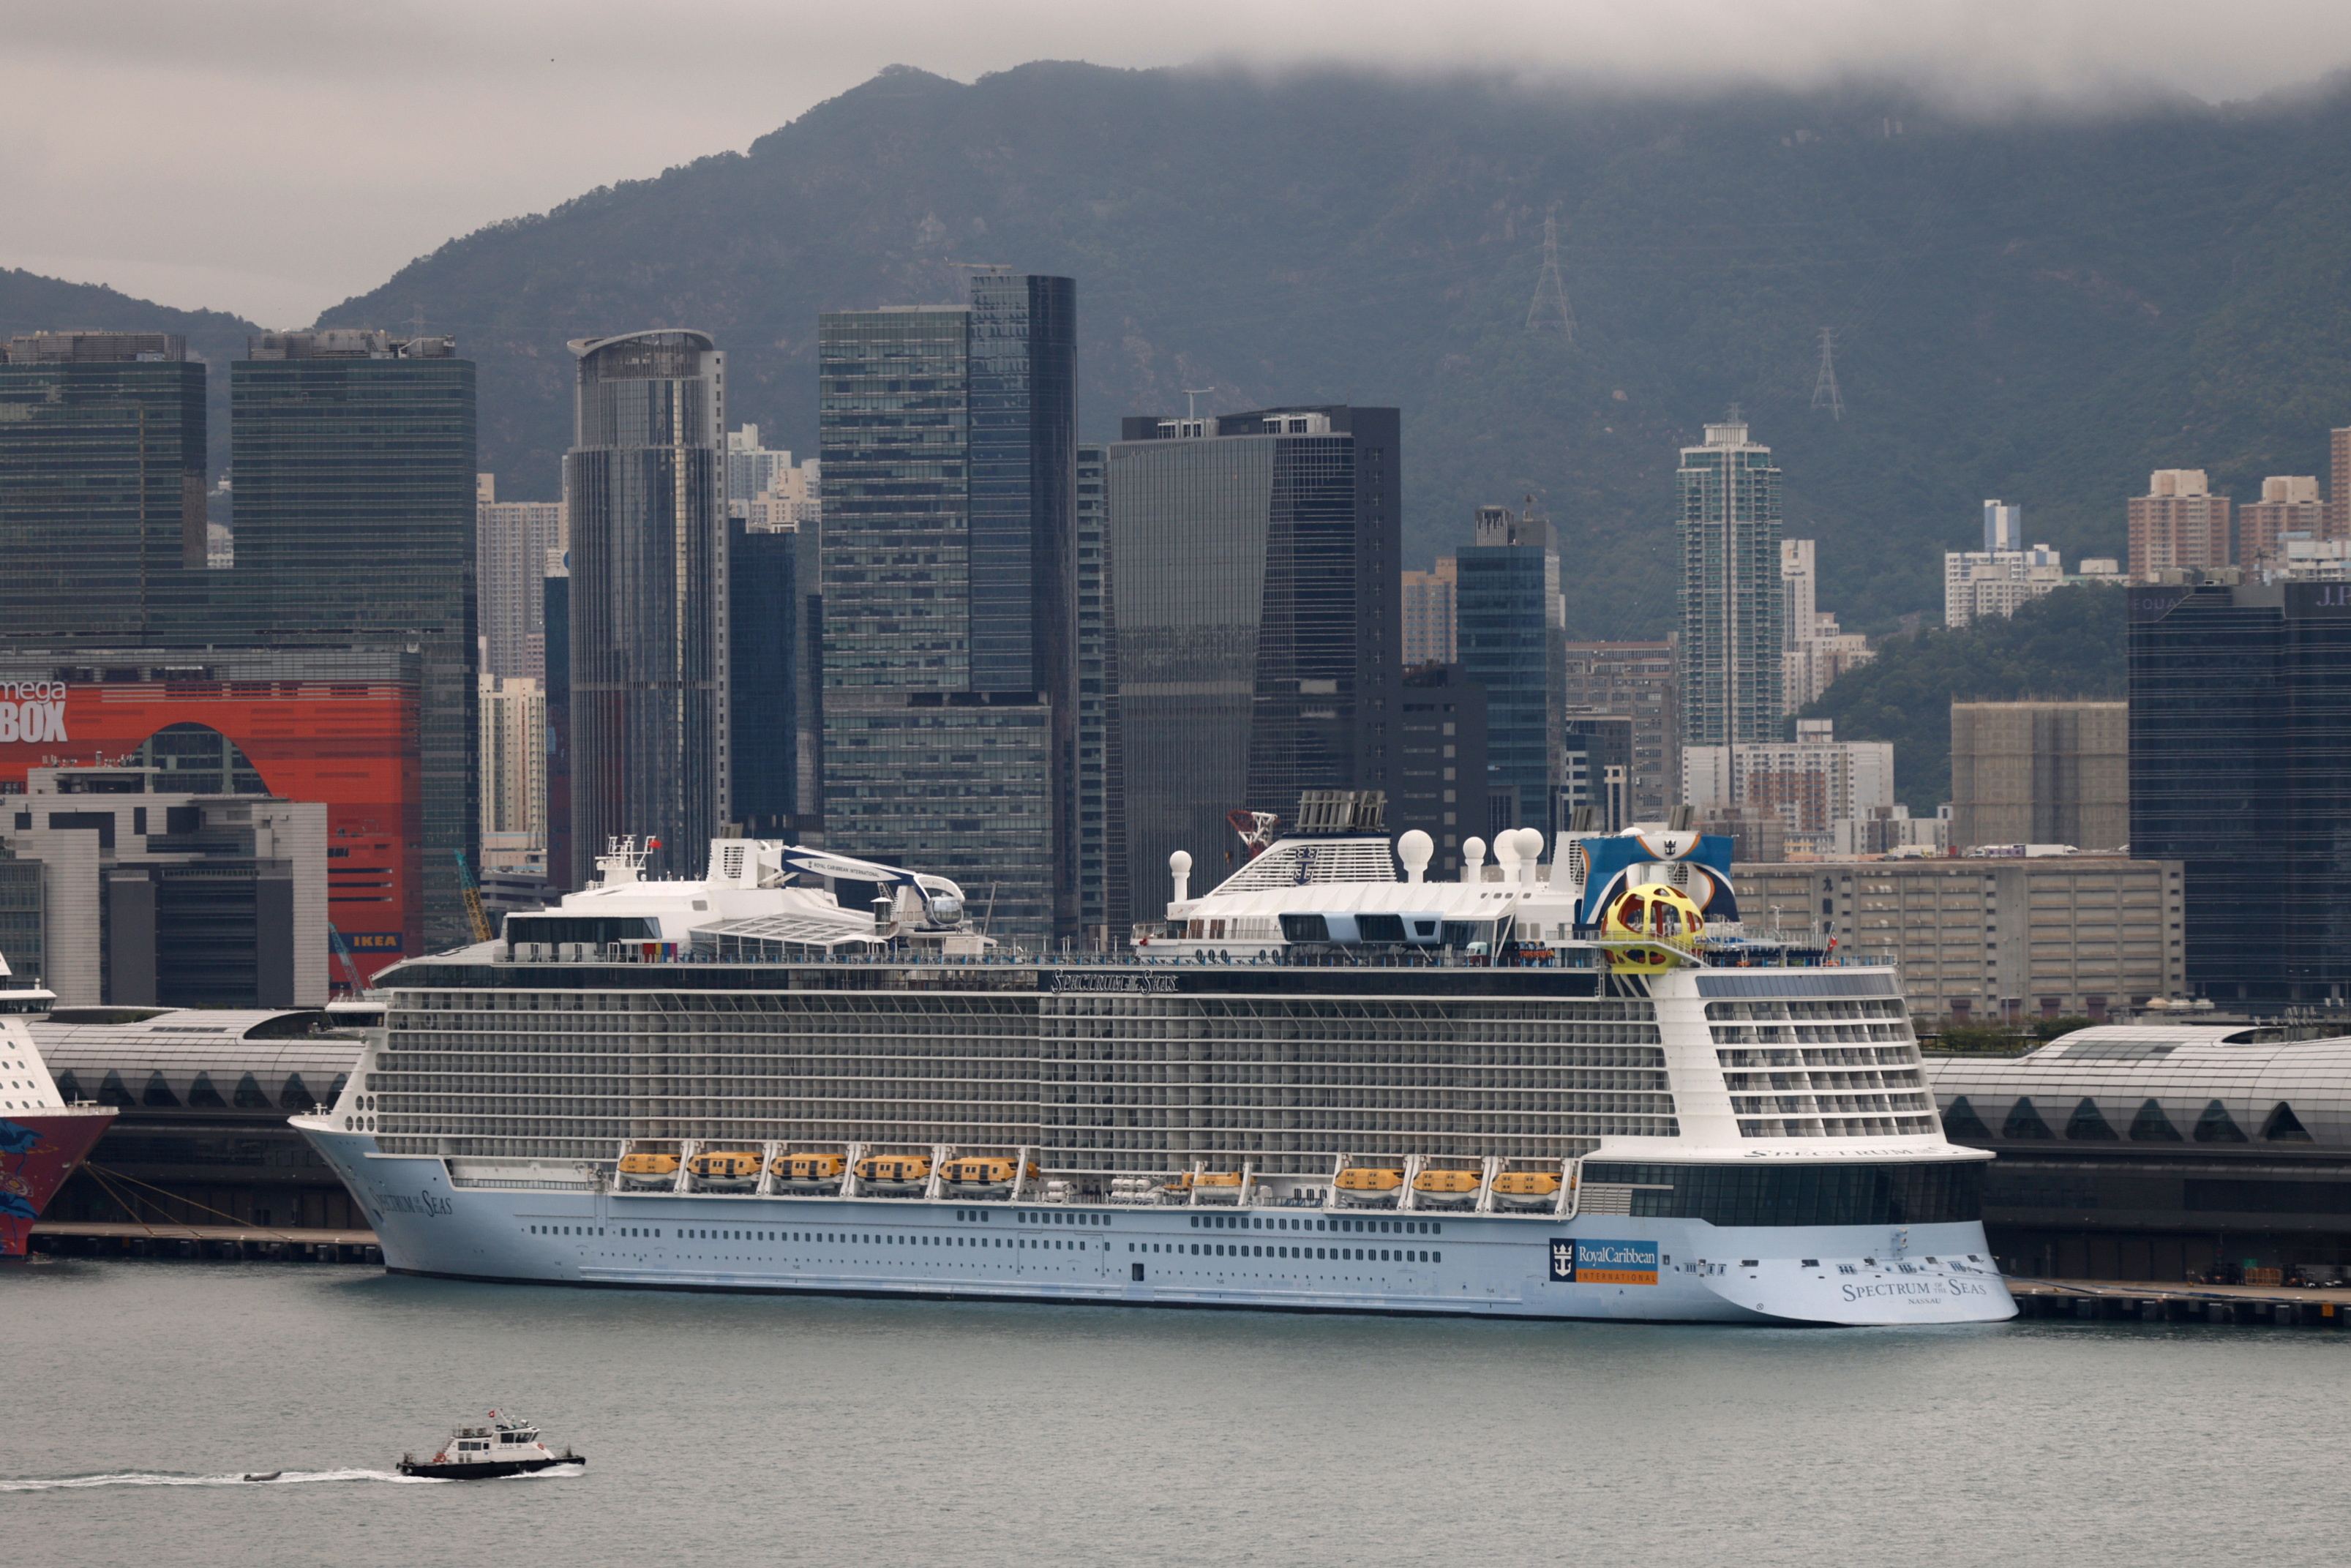 The Royal Caribbean cruise ship 